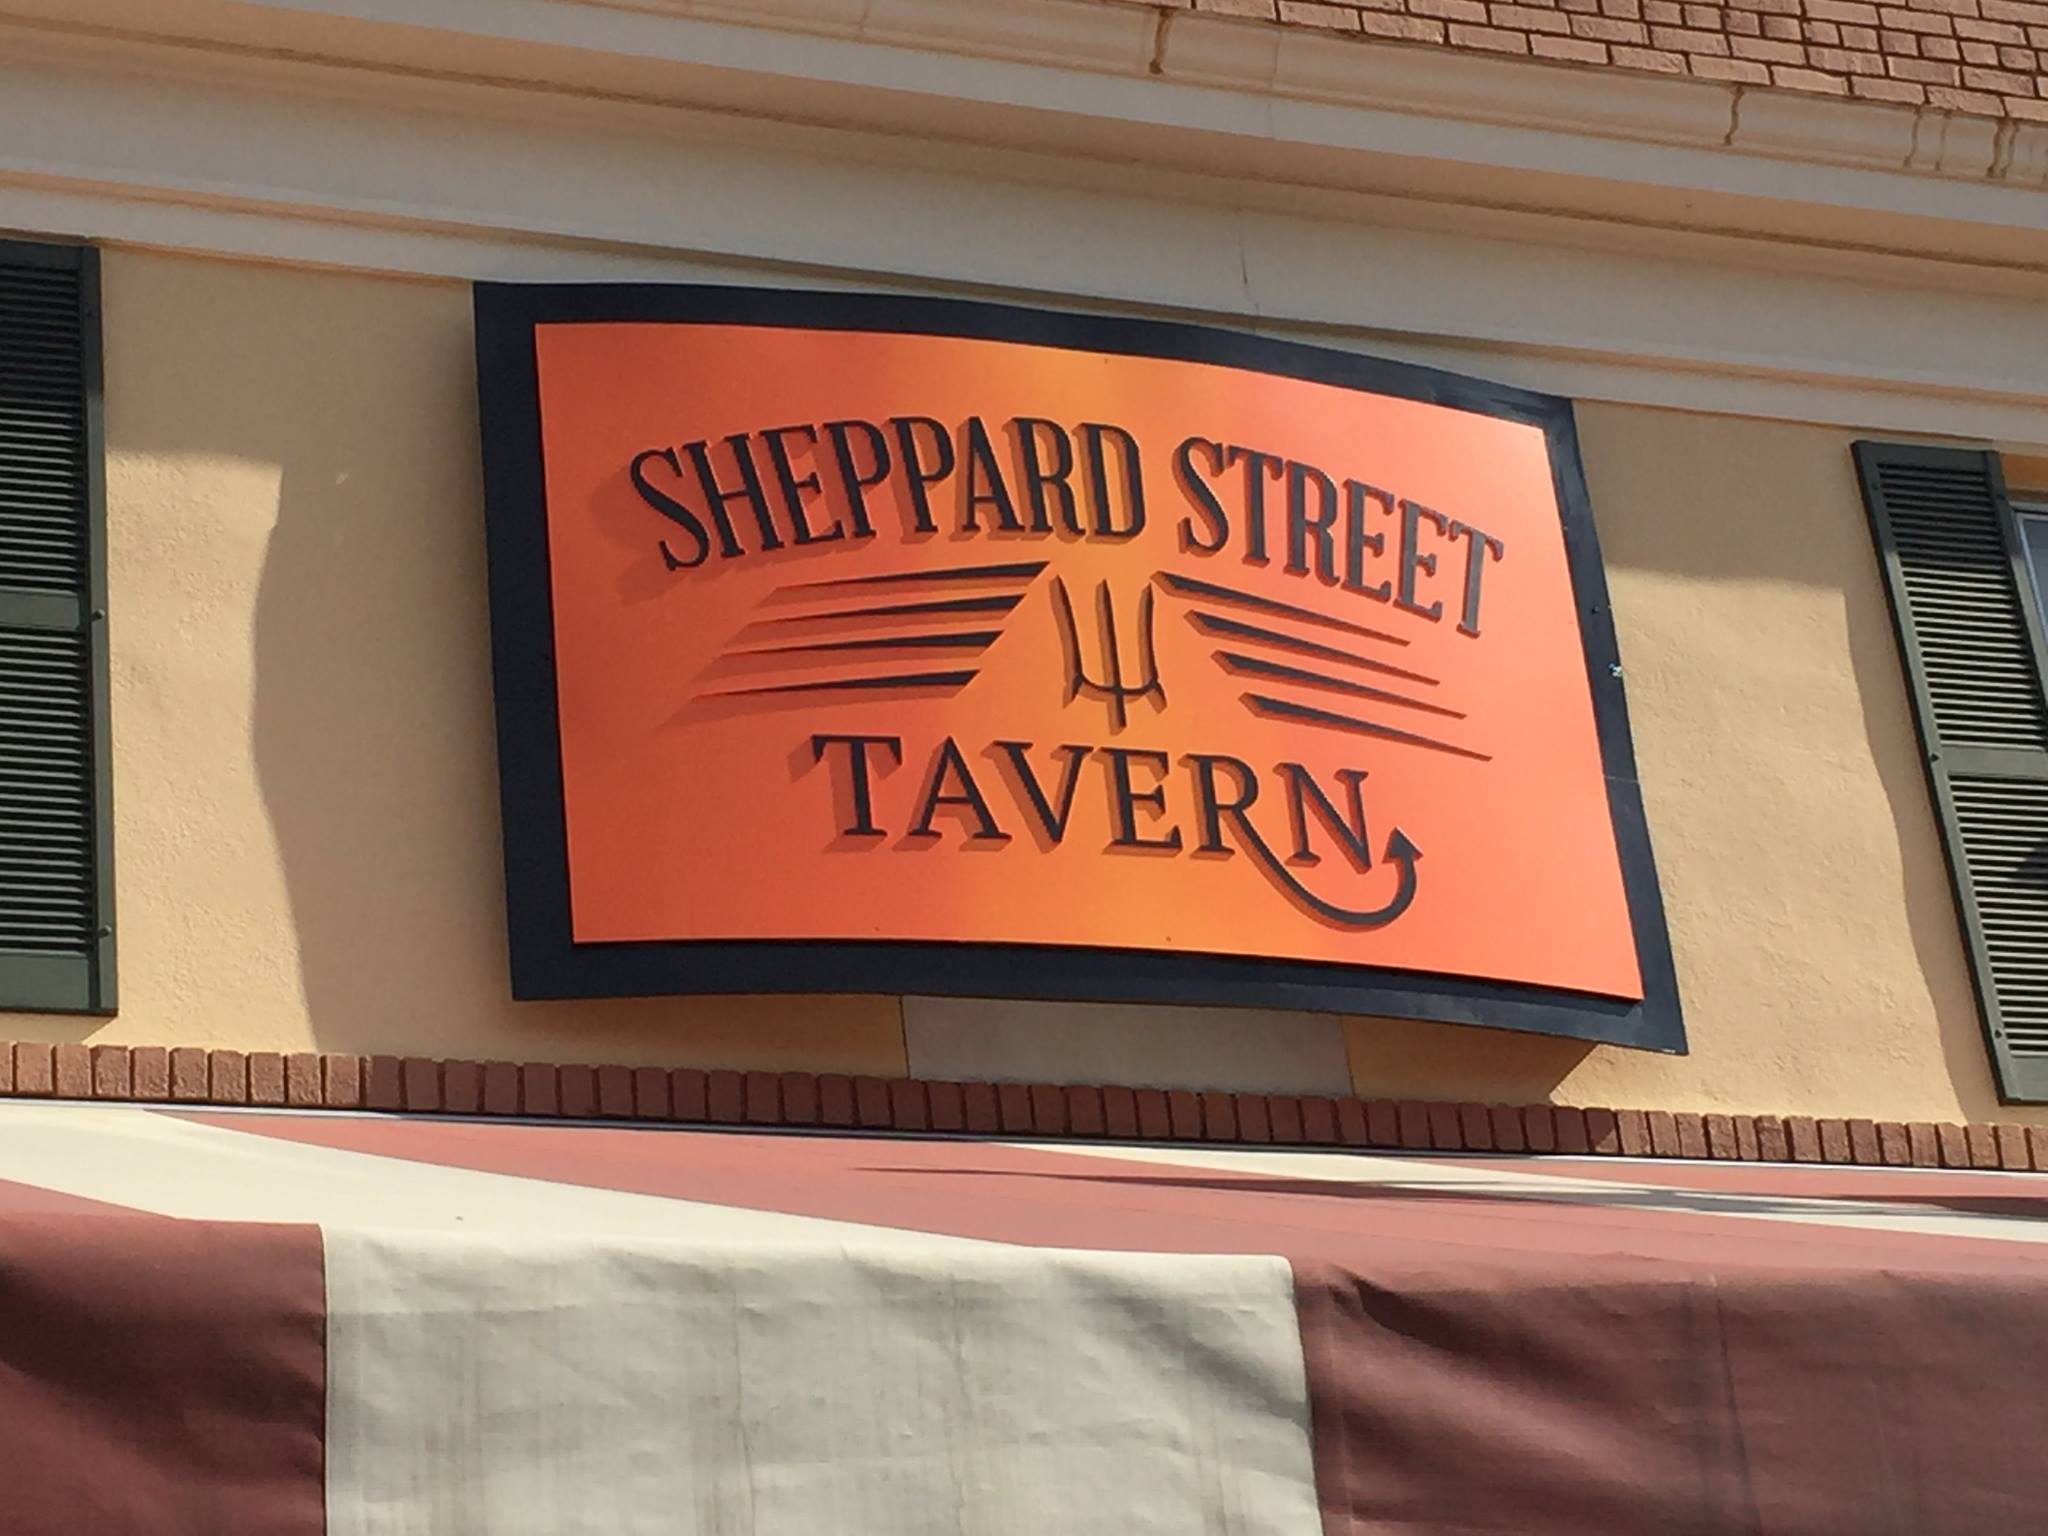 Sheppard street tavern